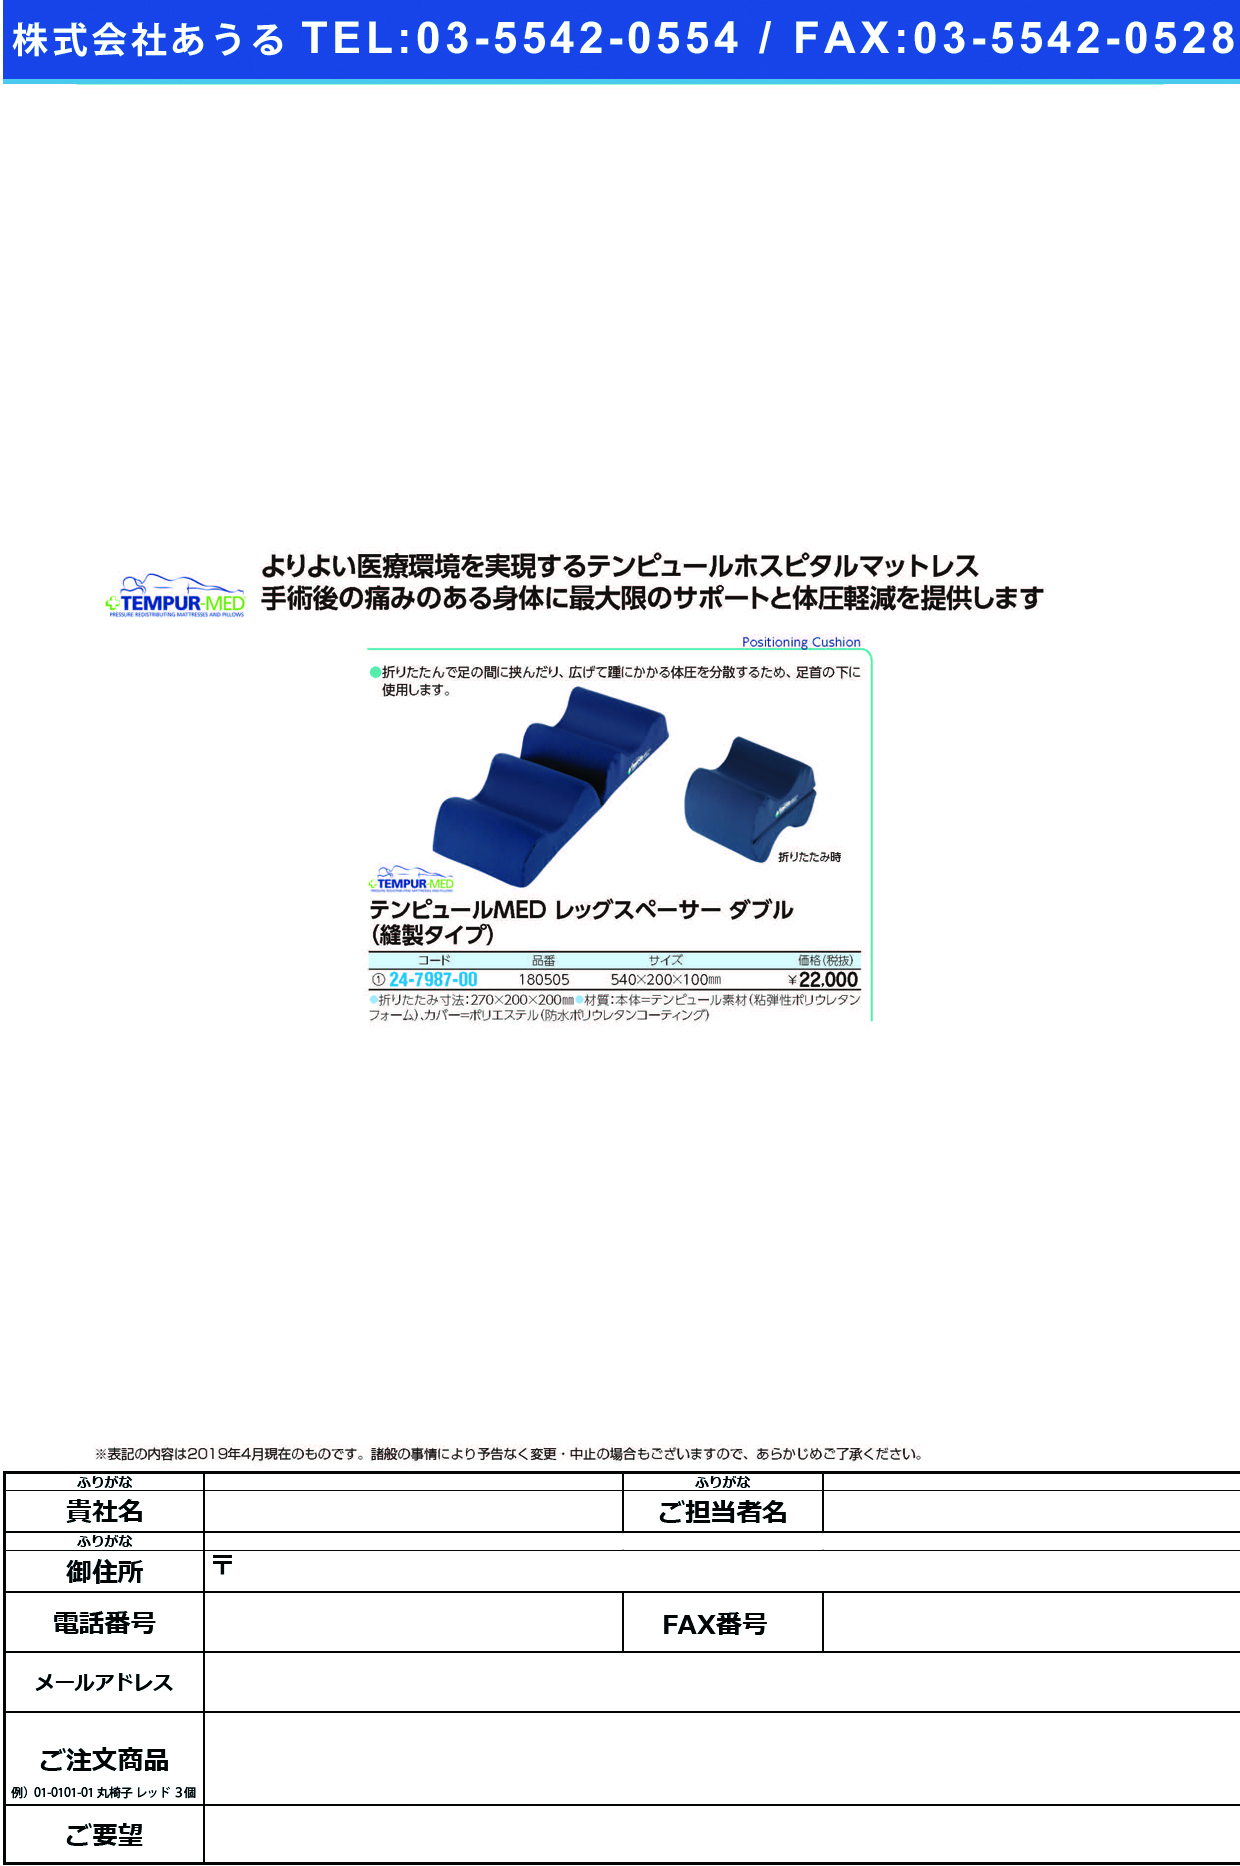 ＭＥＤレッグスペーサー・ダブル180505(54X20X10CM) MEDﾚｯｸﾞｽﾍﾟｰｻｰﾀﾞﾌﾞﾙ(テンピュールシーリージャパン)